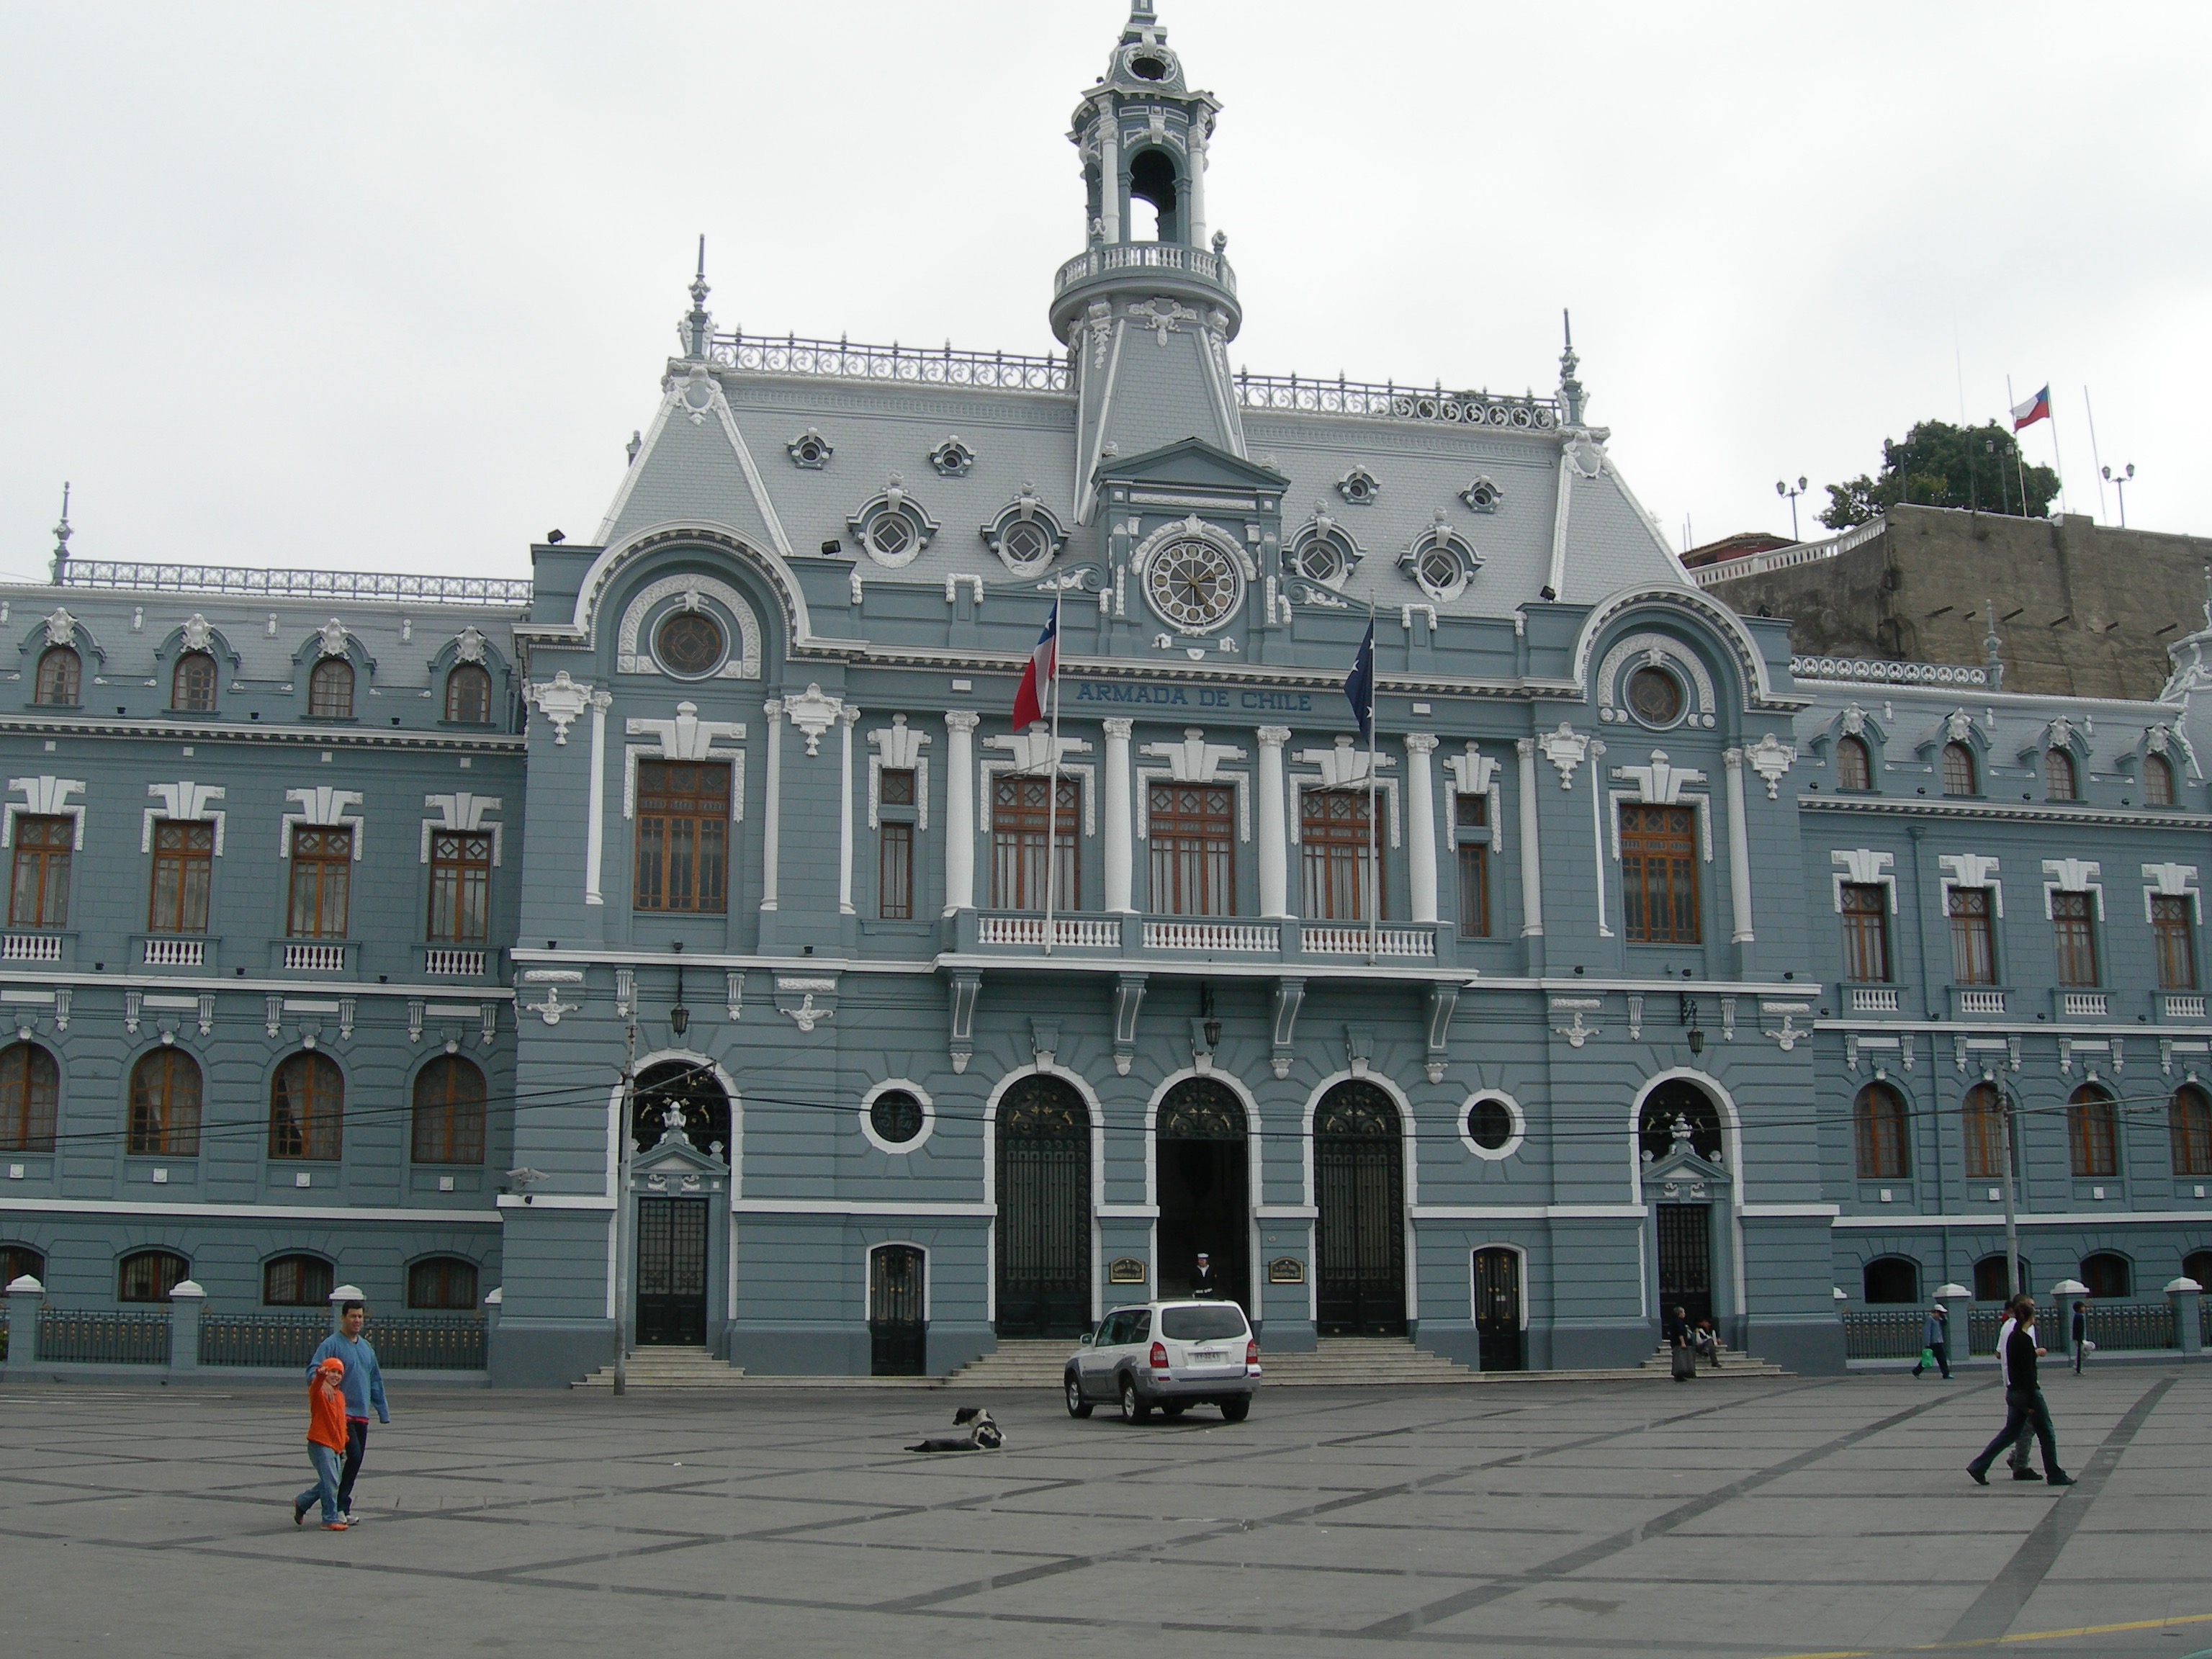 The<em> Armada de Chile</em> building in Plaza Sotomayor.